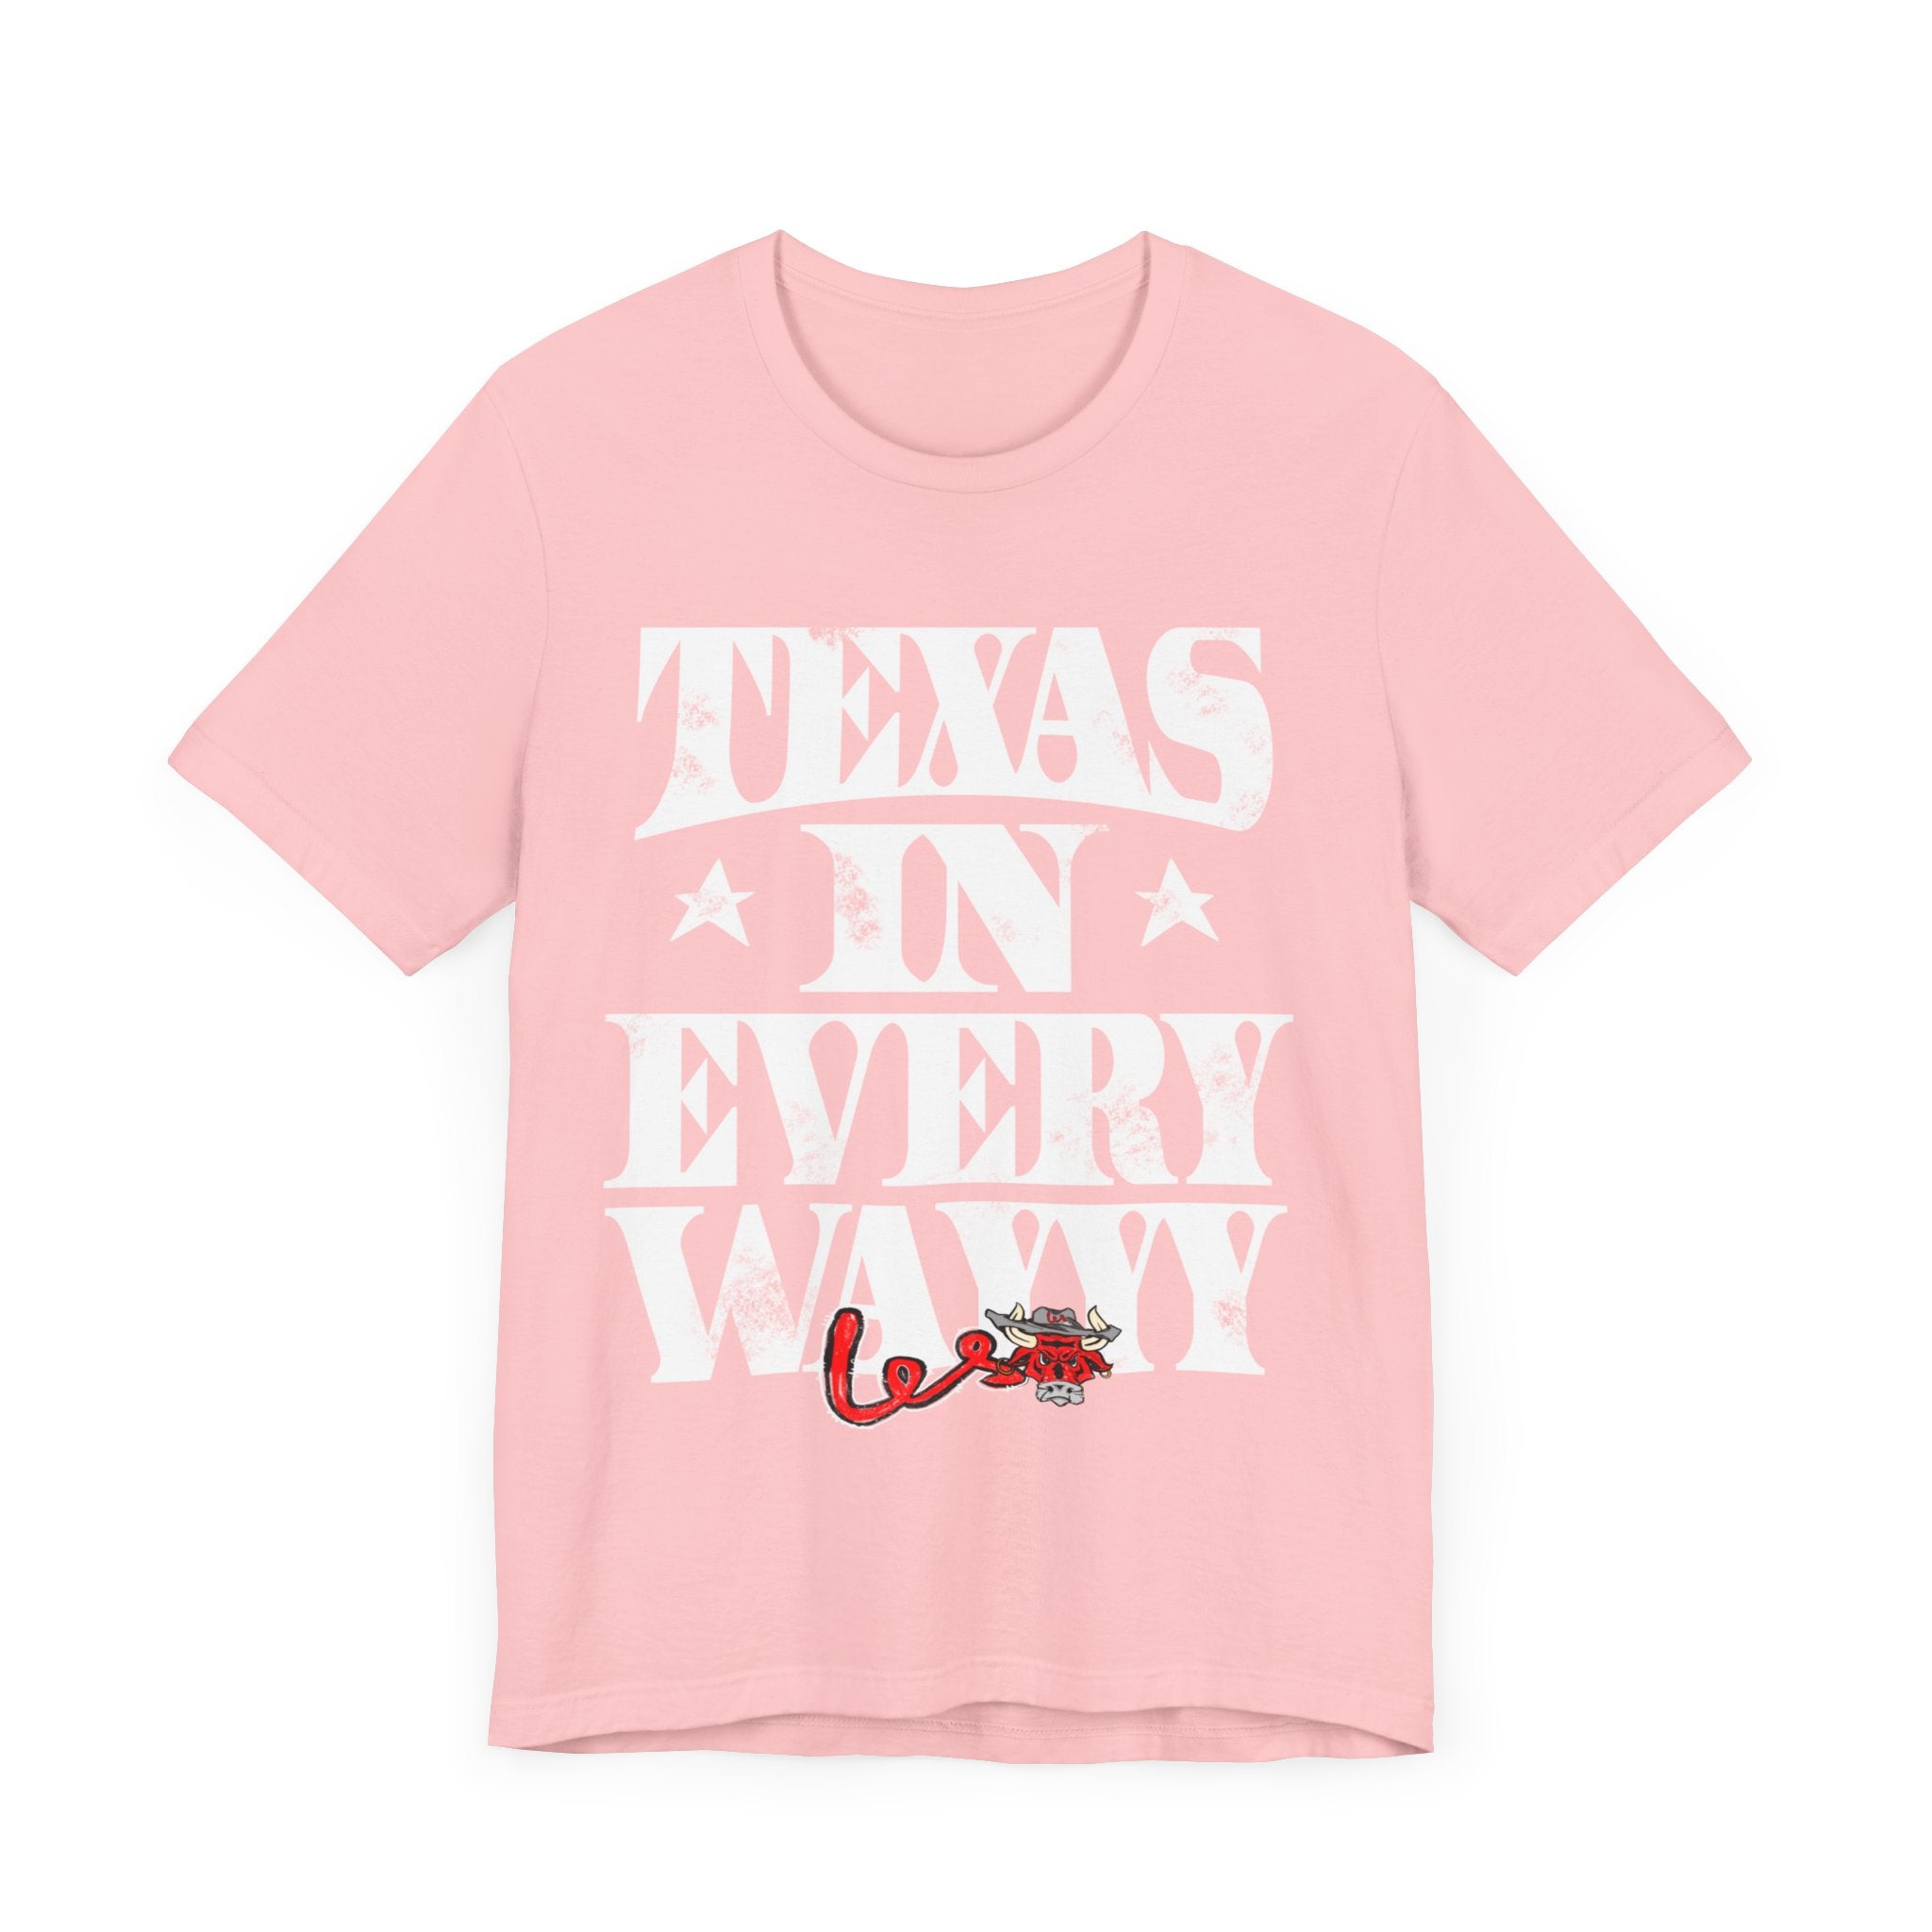 Texas in Every Wayyy Classic T-Shirt